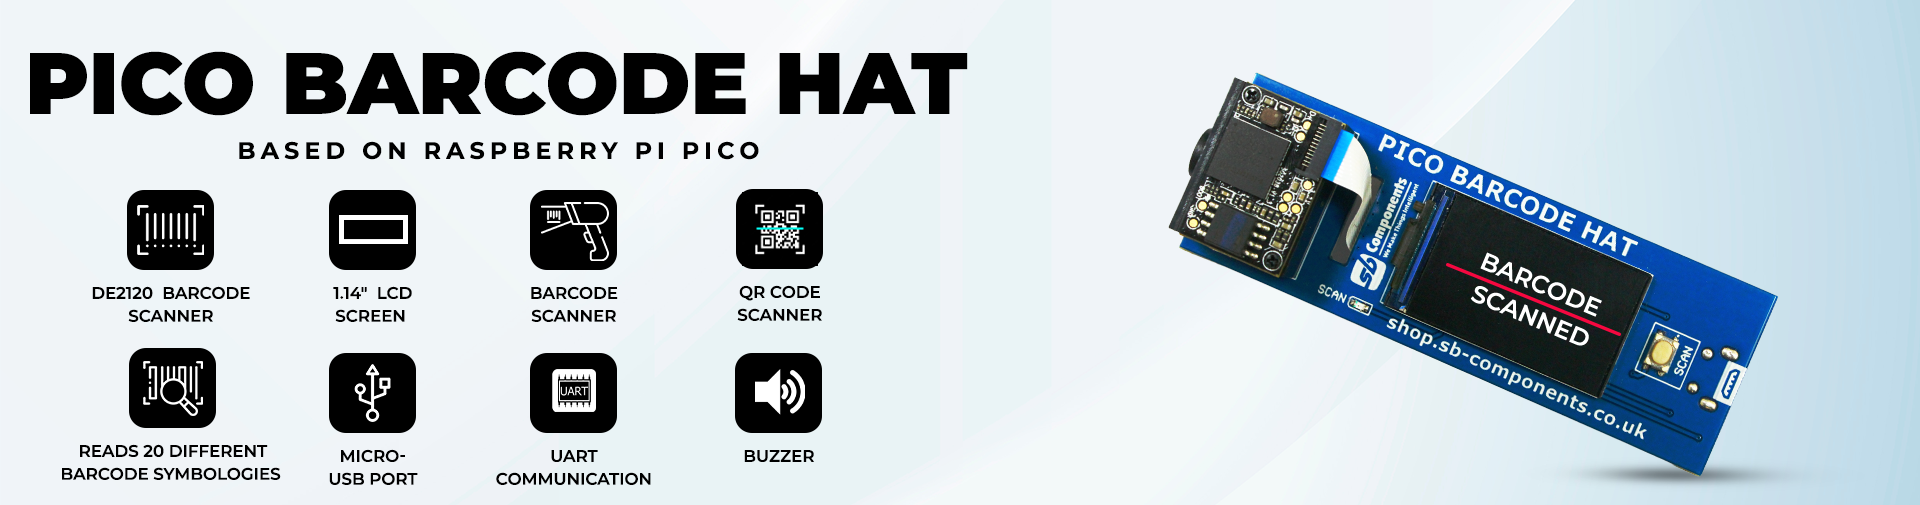 Pico barcode HAT